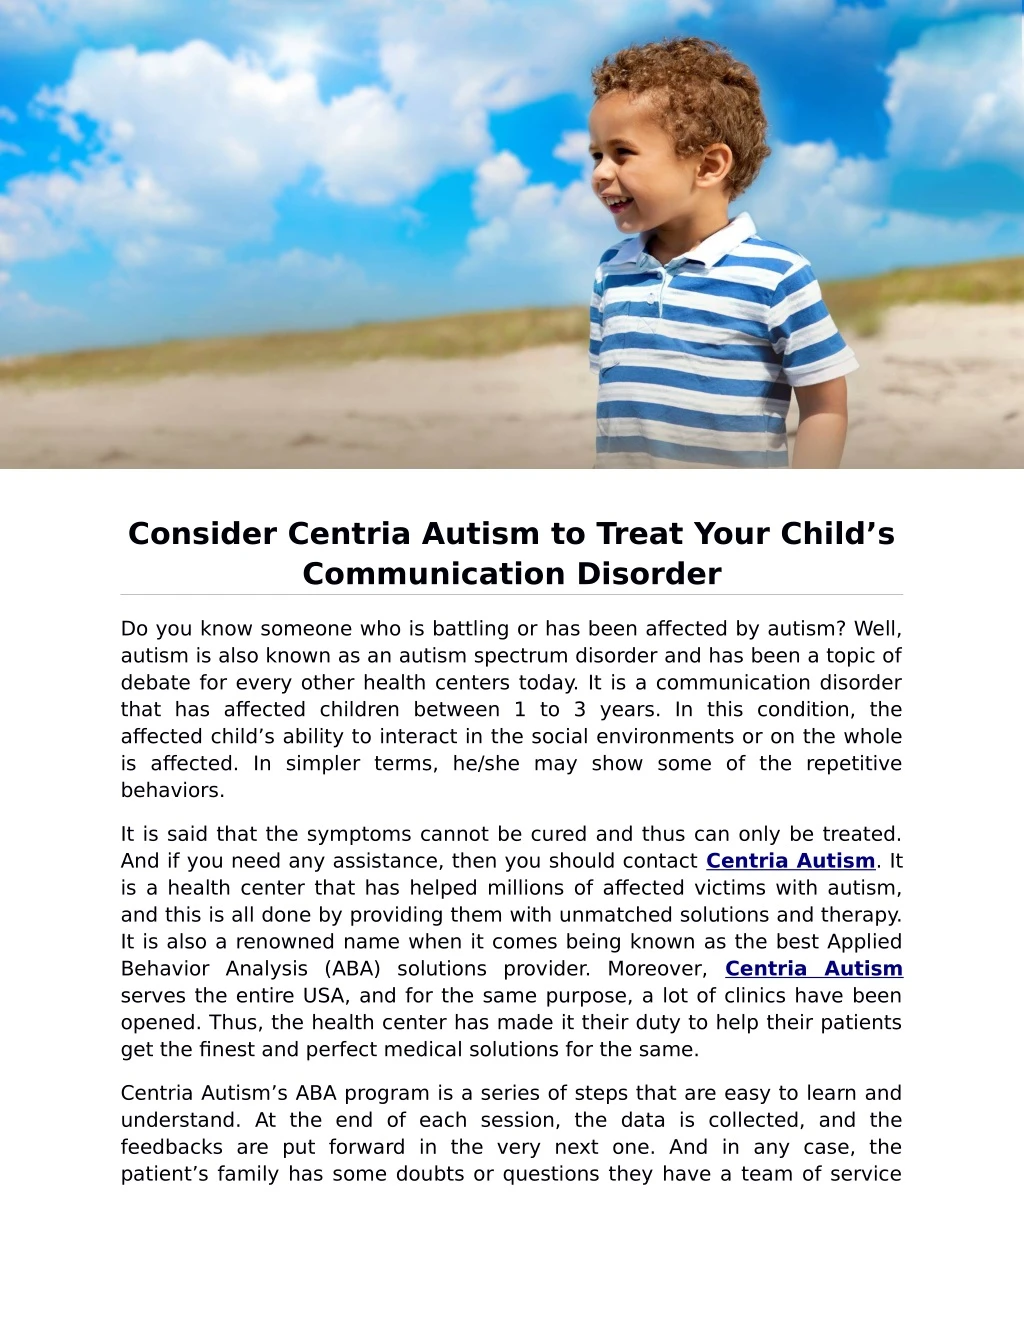 consider centria autism to treat your child